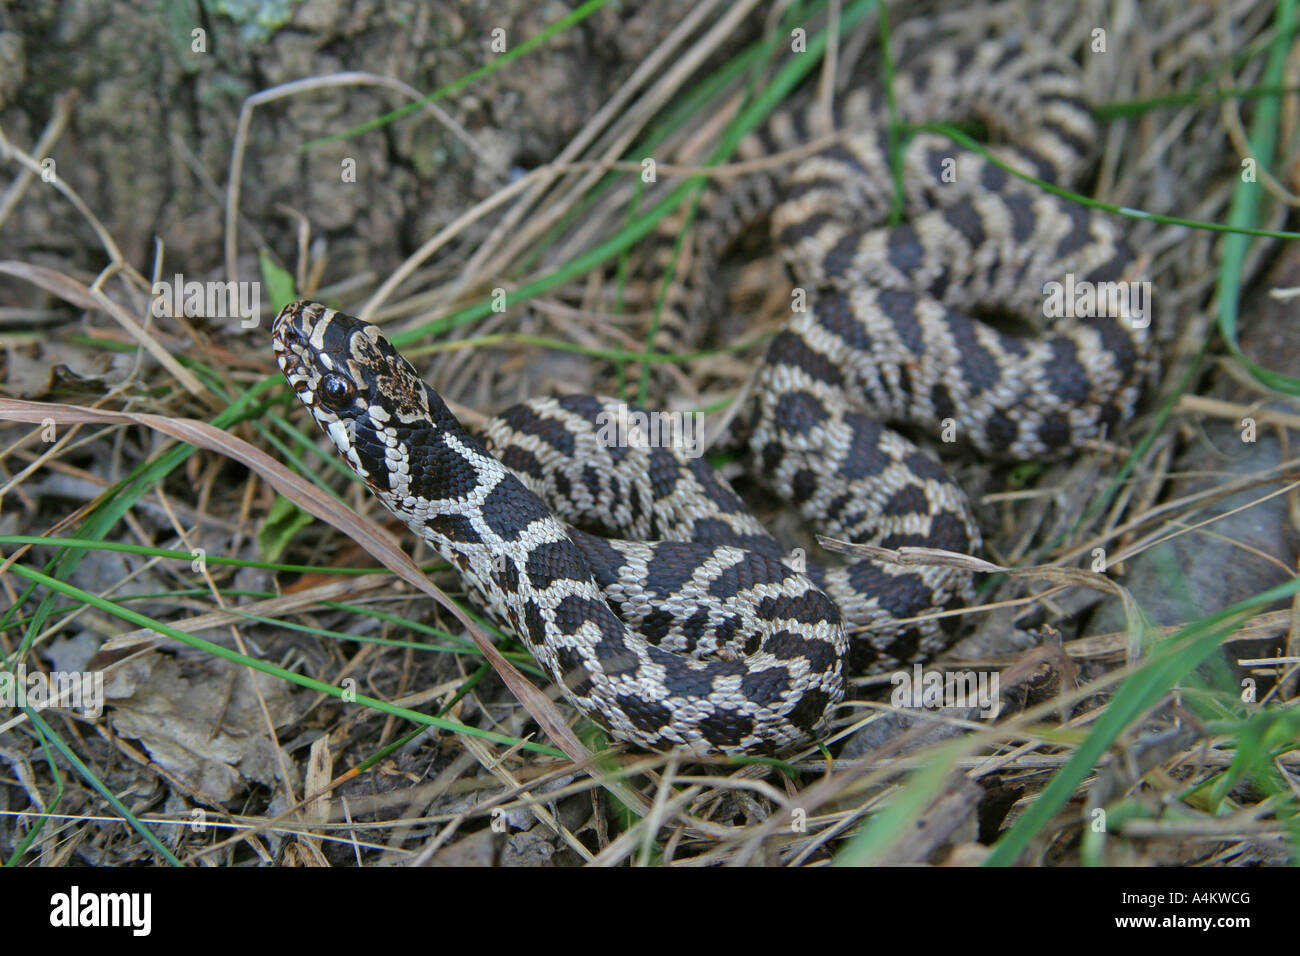 Four-lined Snake, Elaphe quatuorlineata sauromates Stock Photo